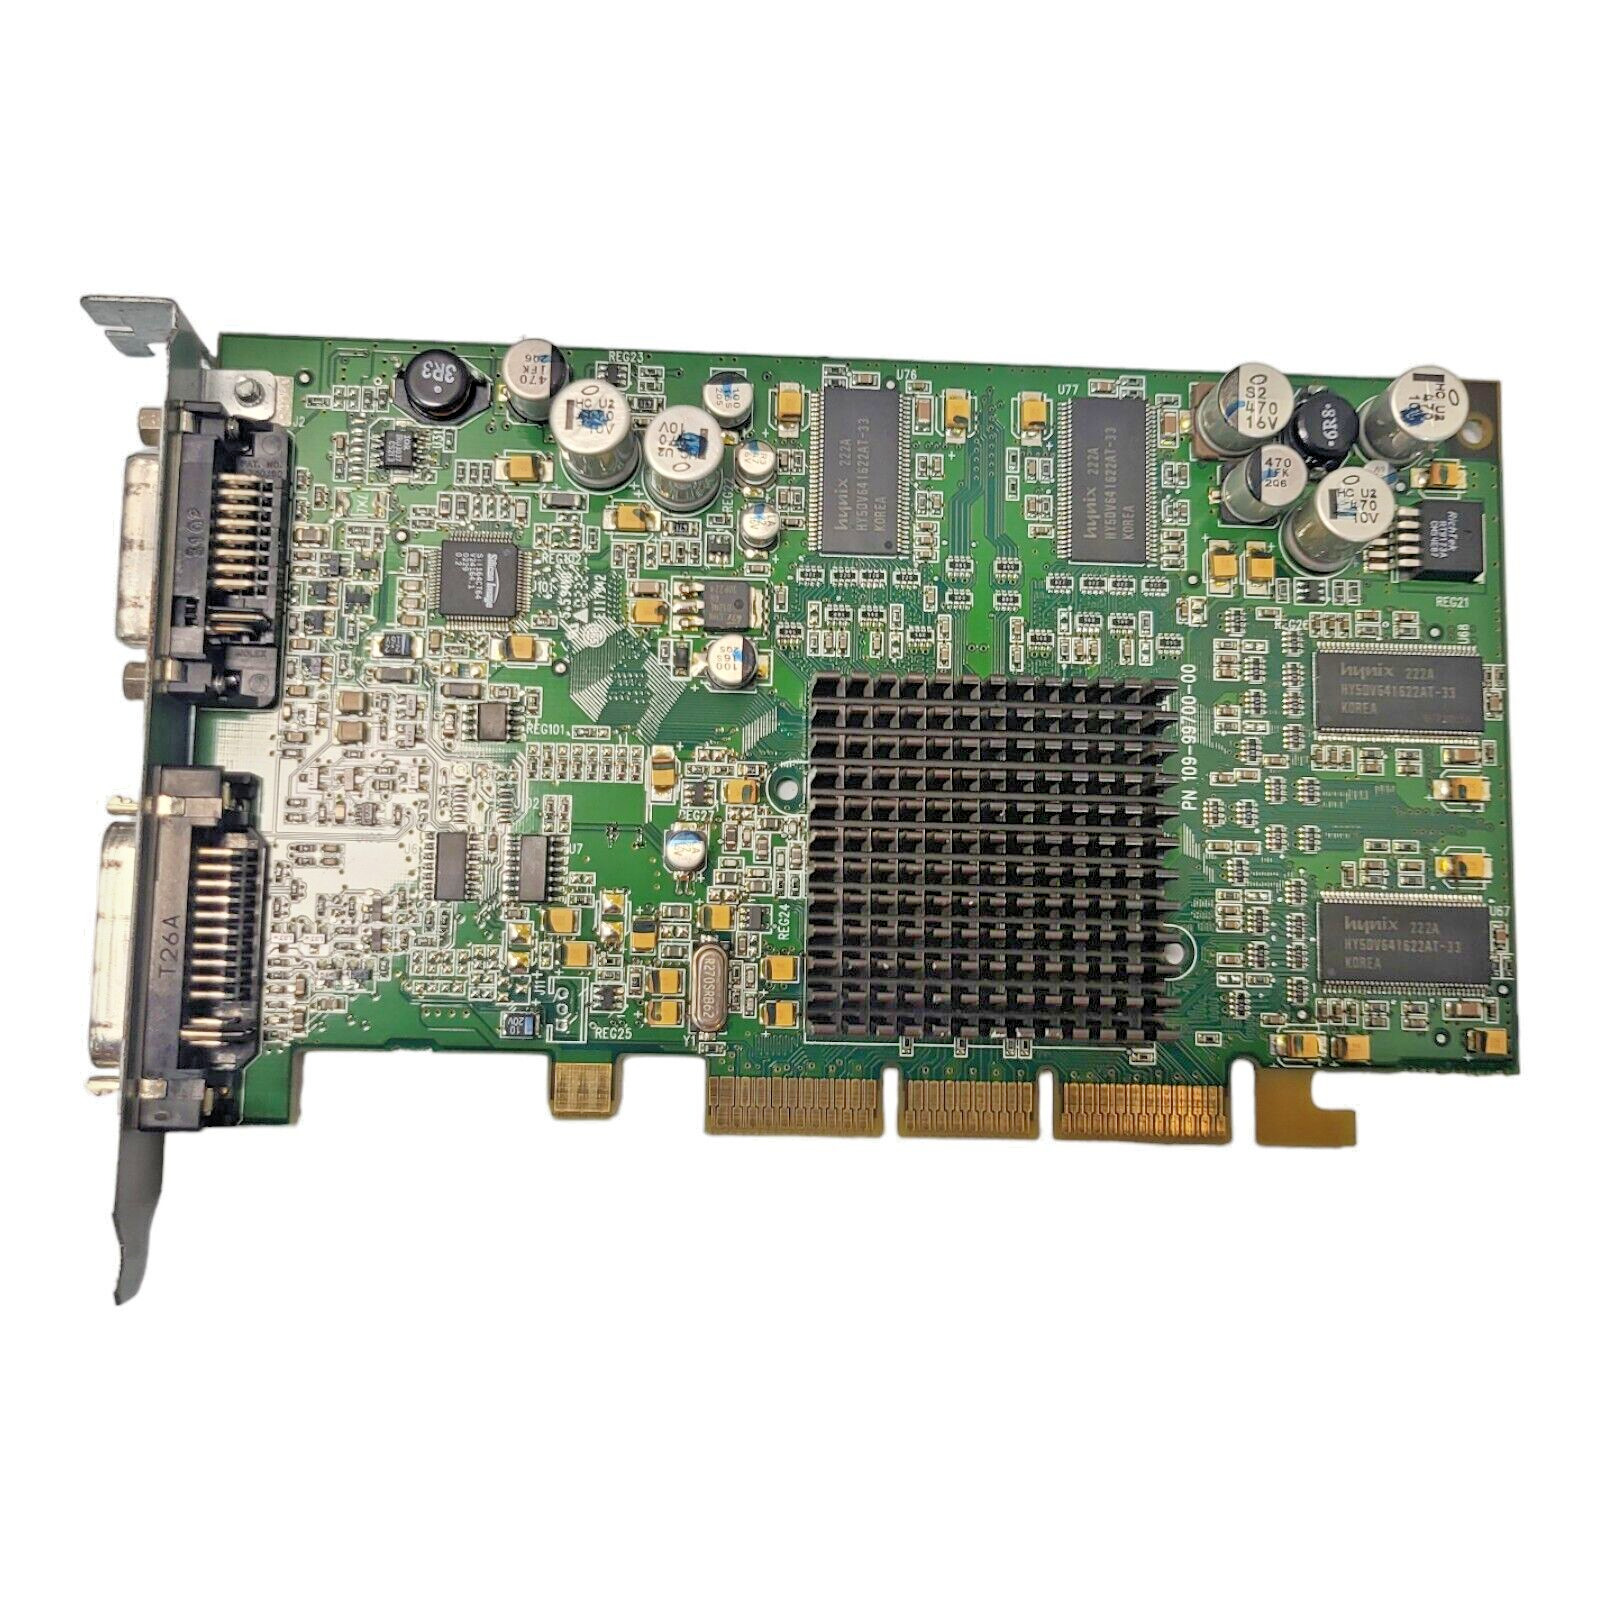 Genuine Apple 630-4716 ATI Radeon 9000 64MB ADC+DVI AGP Video Graphics Card